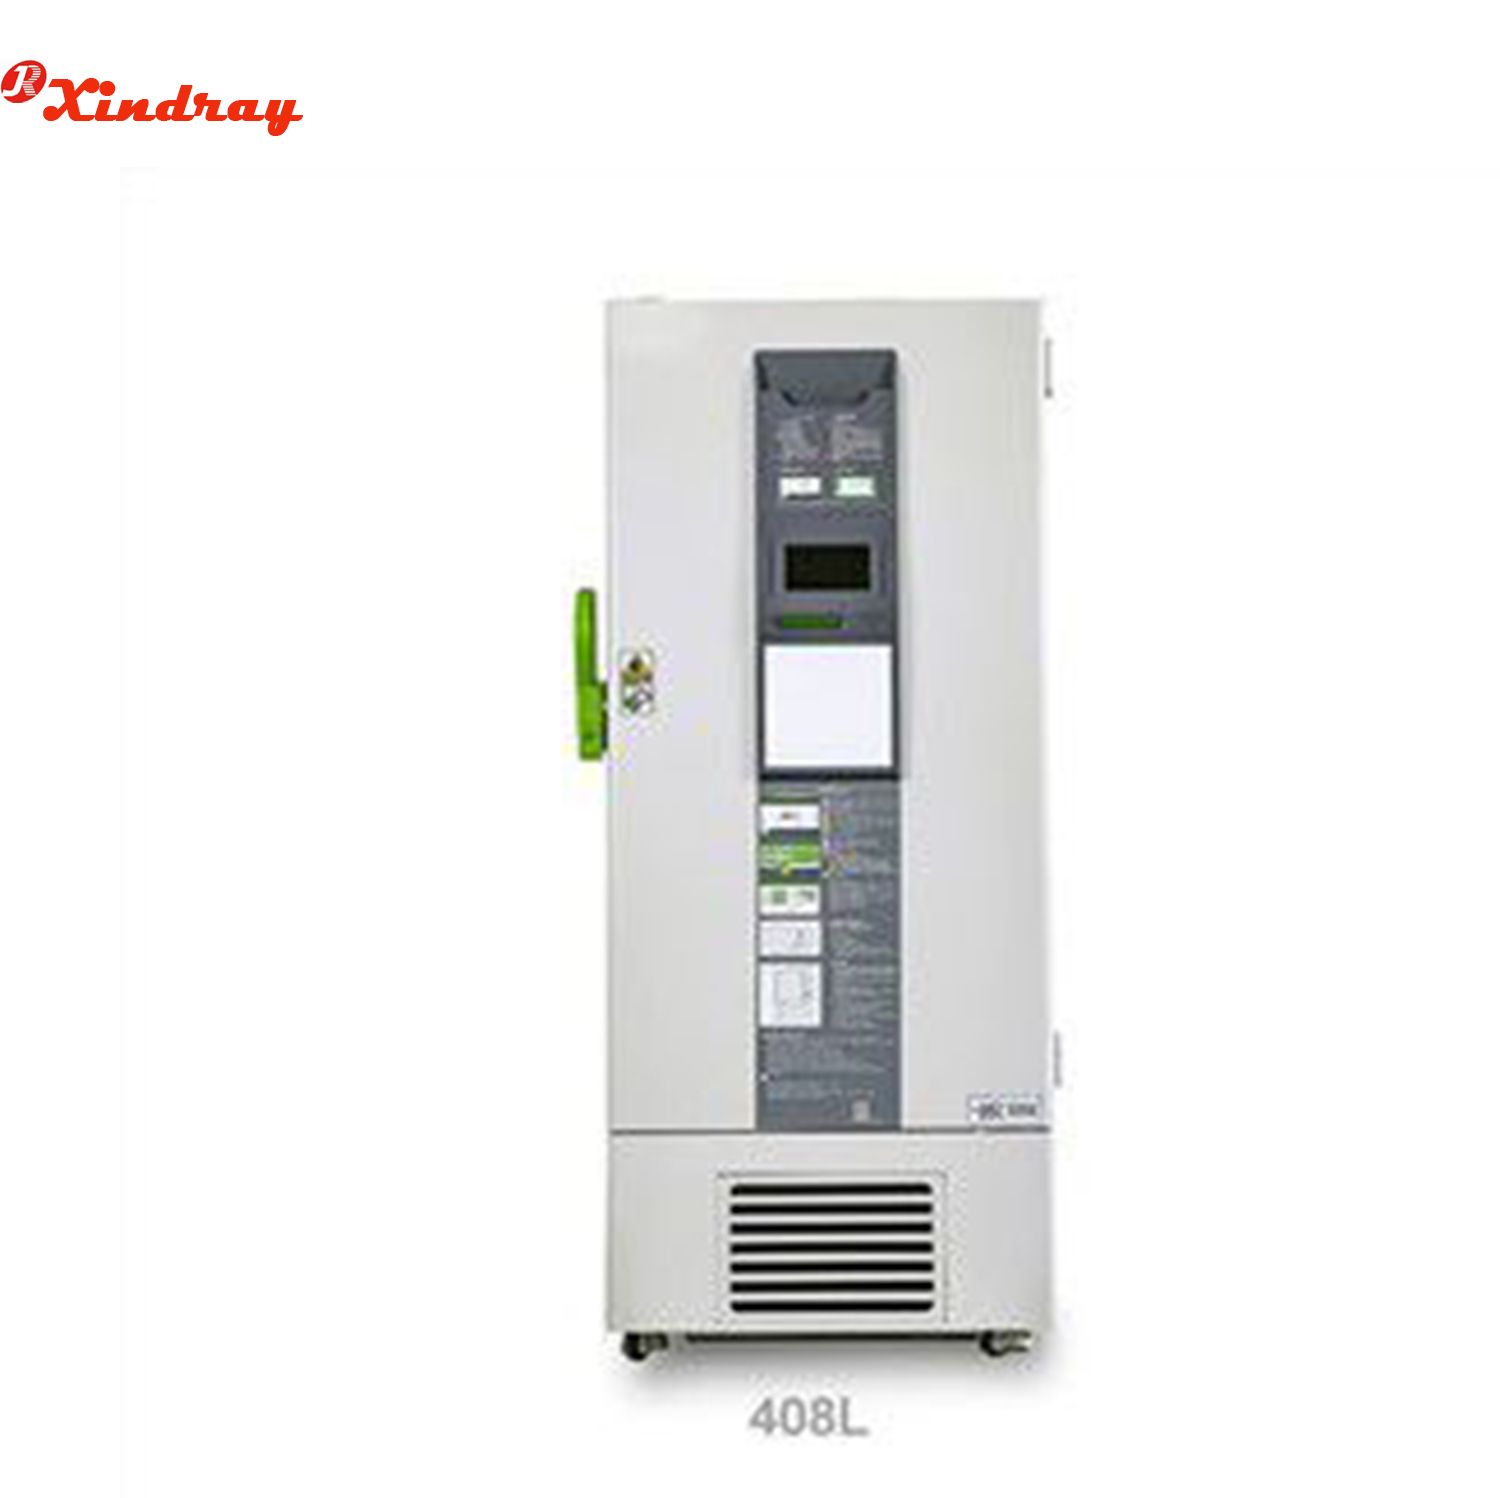 Lab And Hospital Cryogenic Refrigerator Dual System -86 Degree Ult Vaccine Freezer 408L/588L/838L